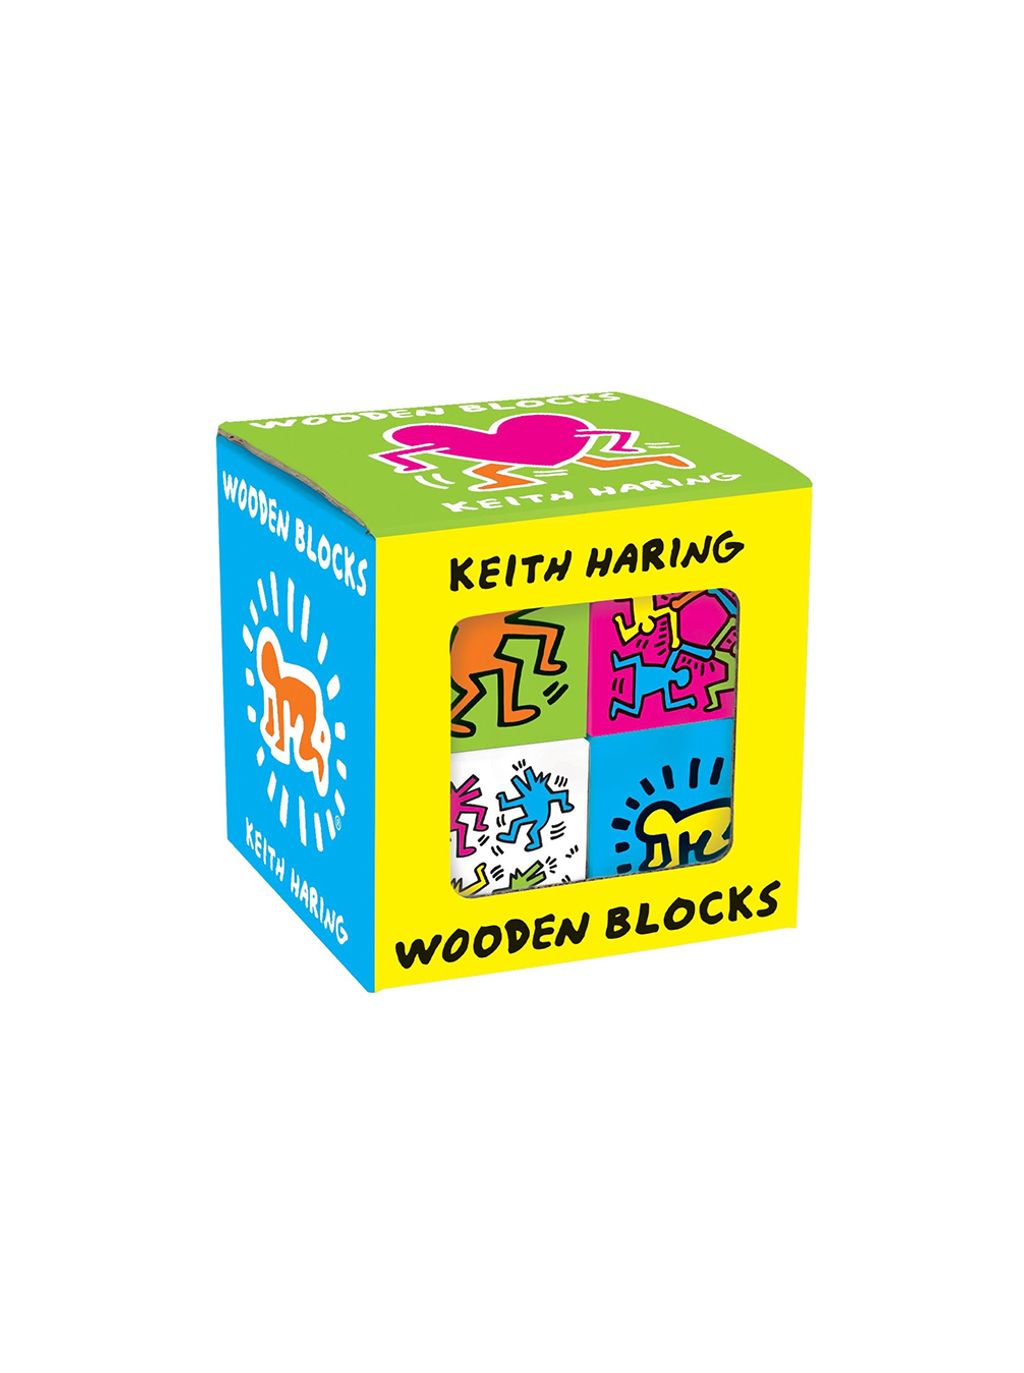 keith haring wooden blocks2.jpg